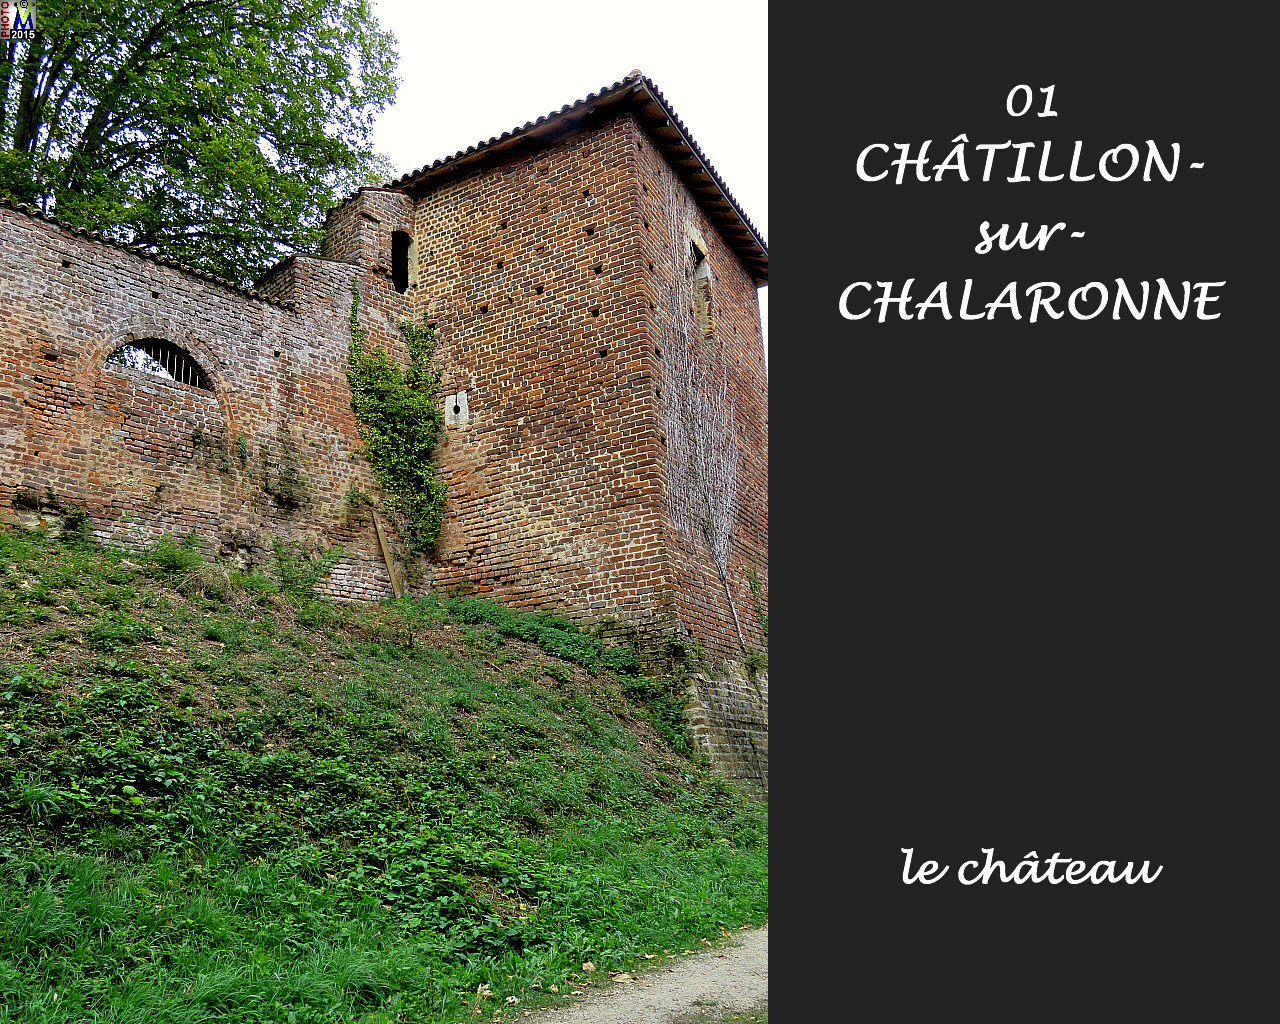 01CHATILLON-CHALARONNE_chateau_114.jpg